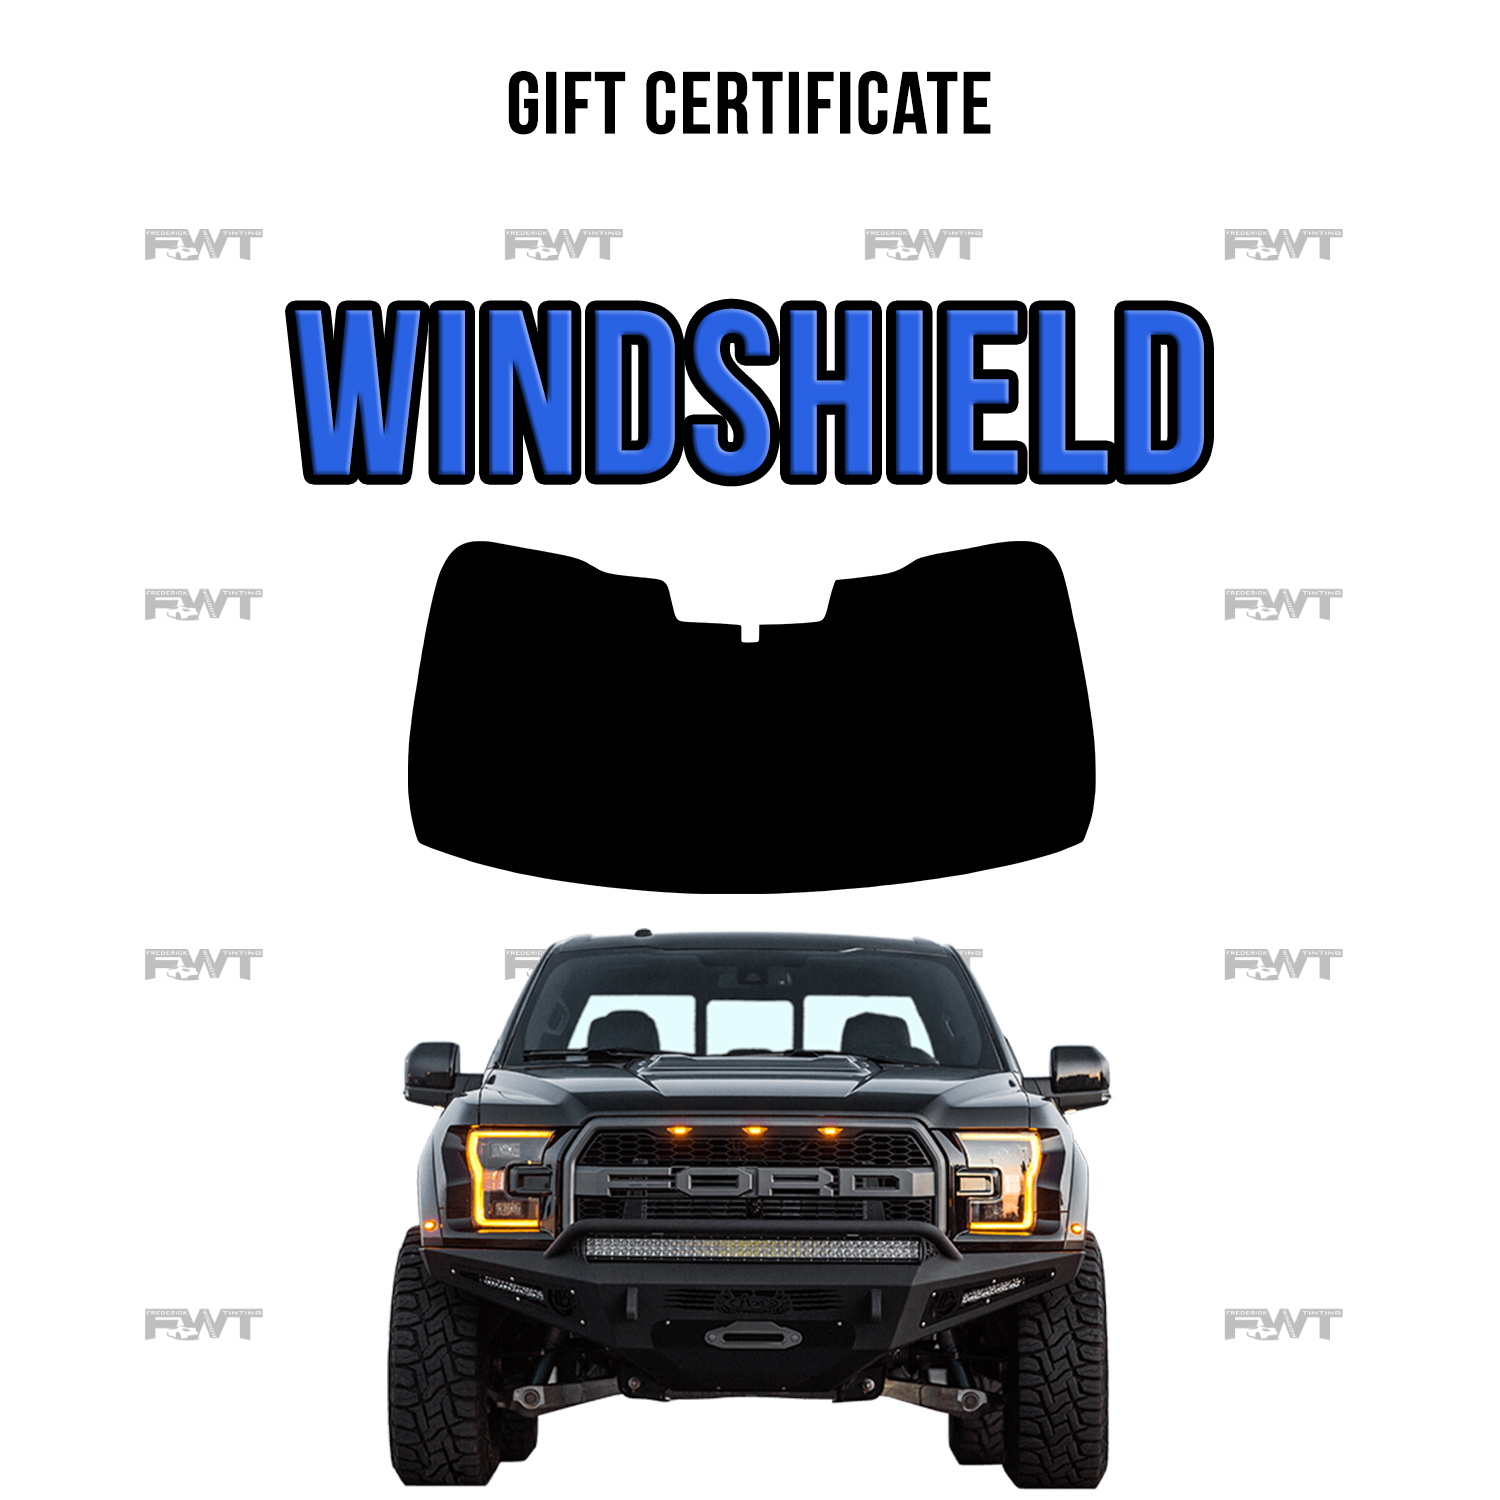 Full Windshield - $250